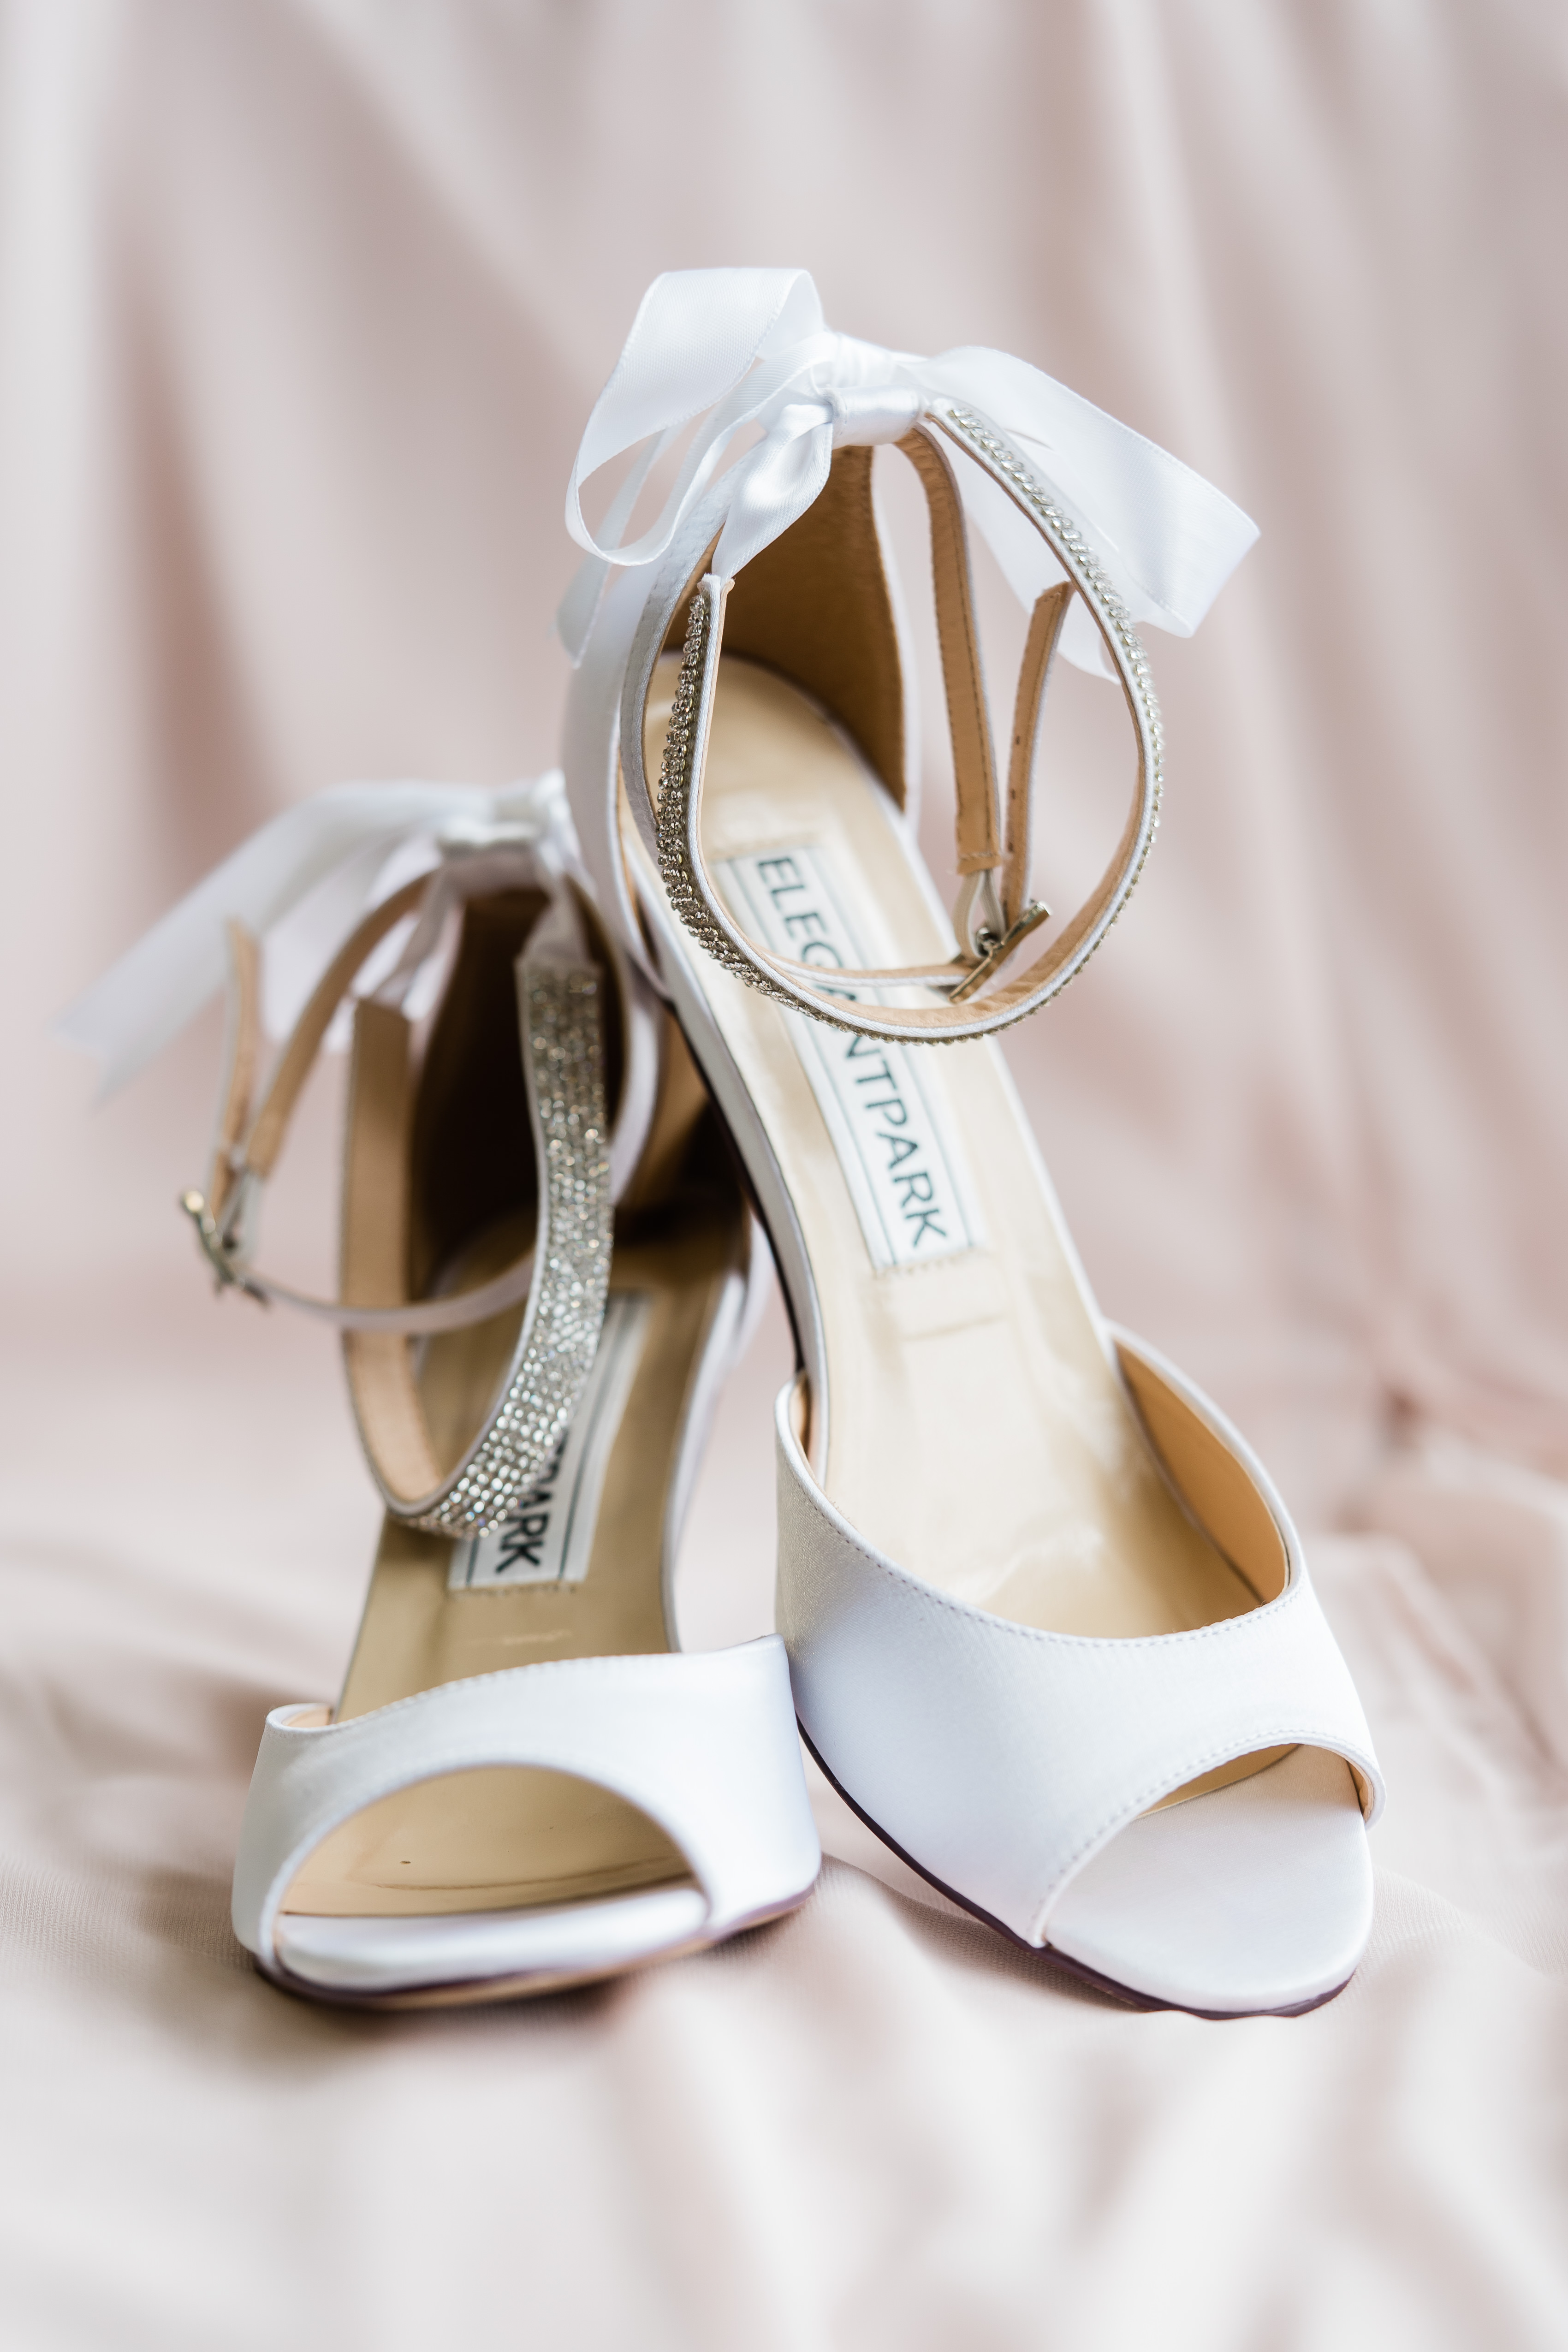 Fort Wayne wedding photographer captures bridal shoes on modern ohio golf course wedding day